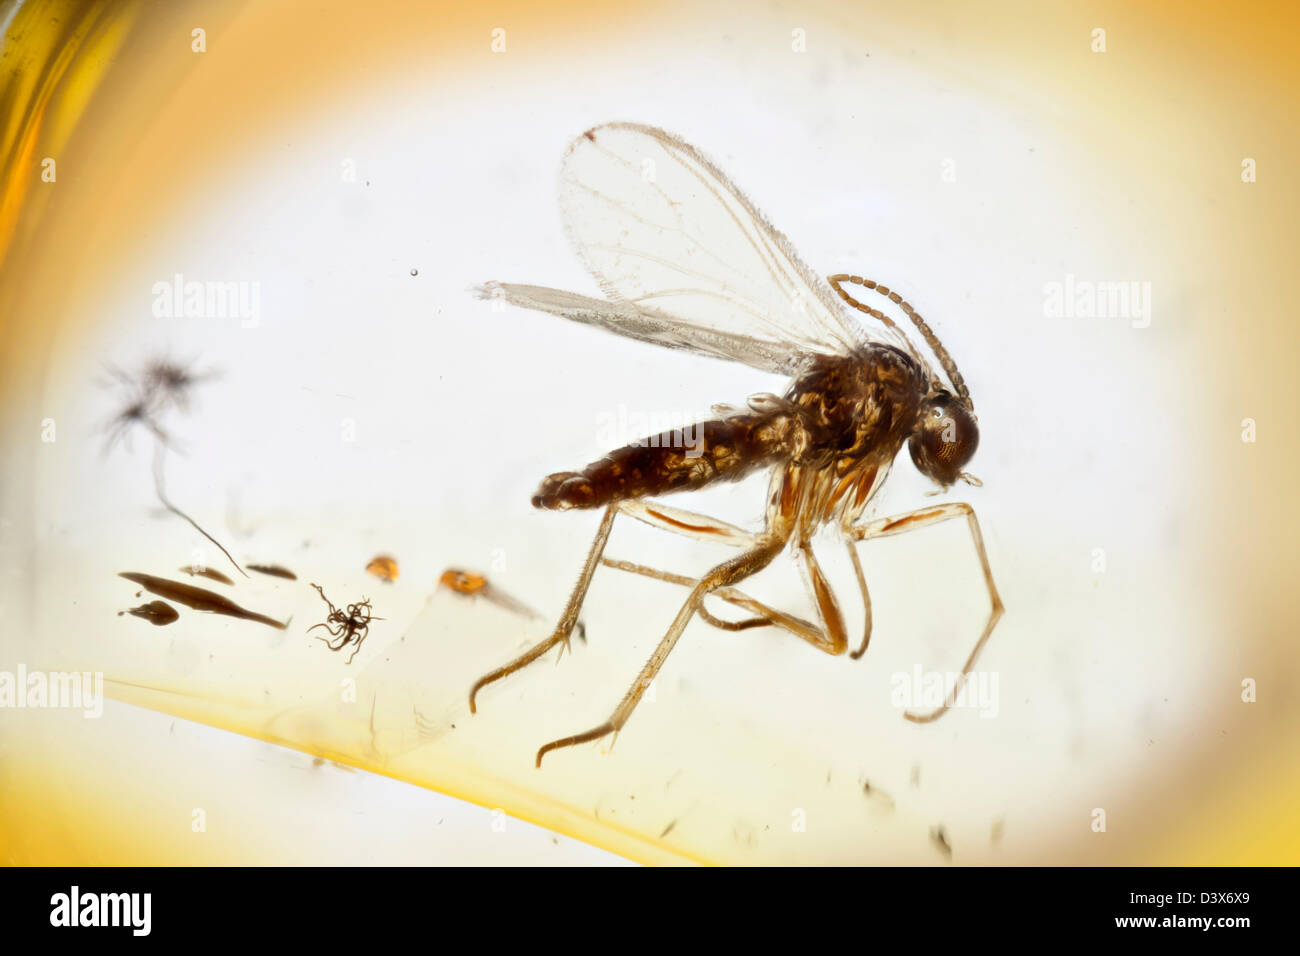 Ambra baltica con un fly captive, vista macro Foto Stock